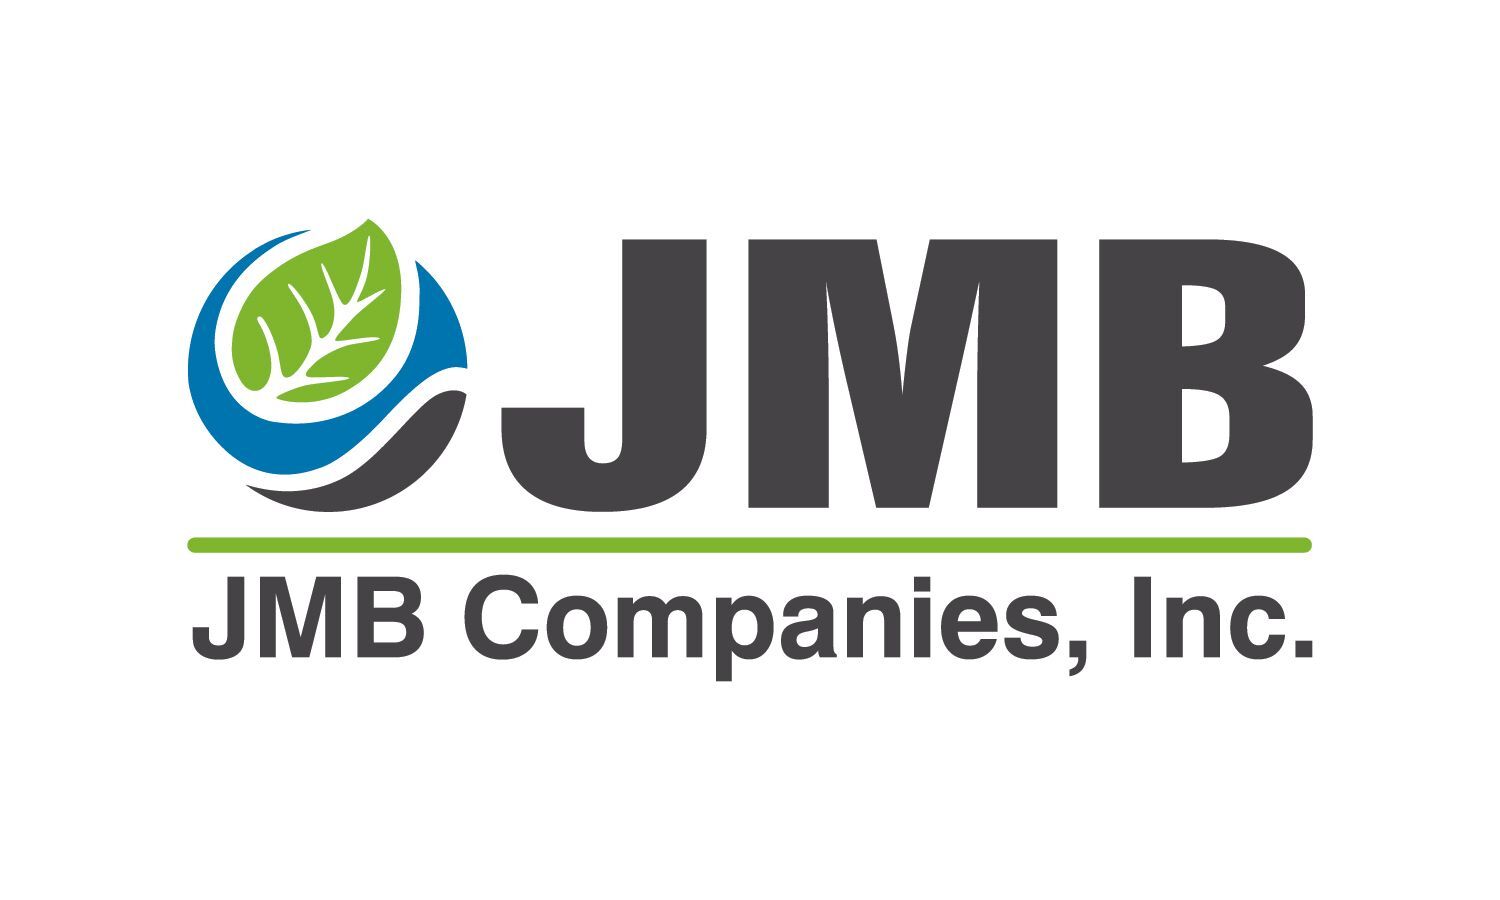 JMB Companies, Inc